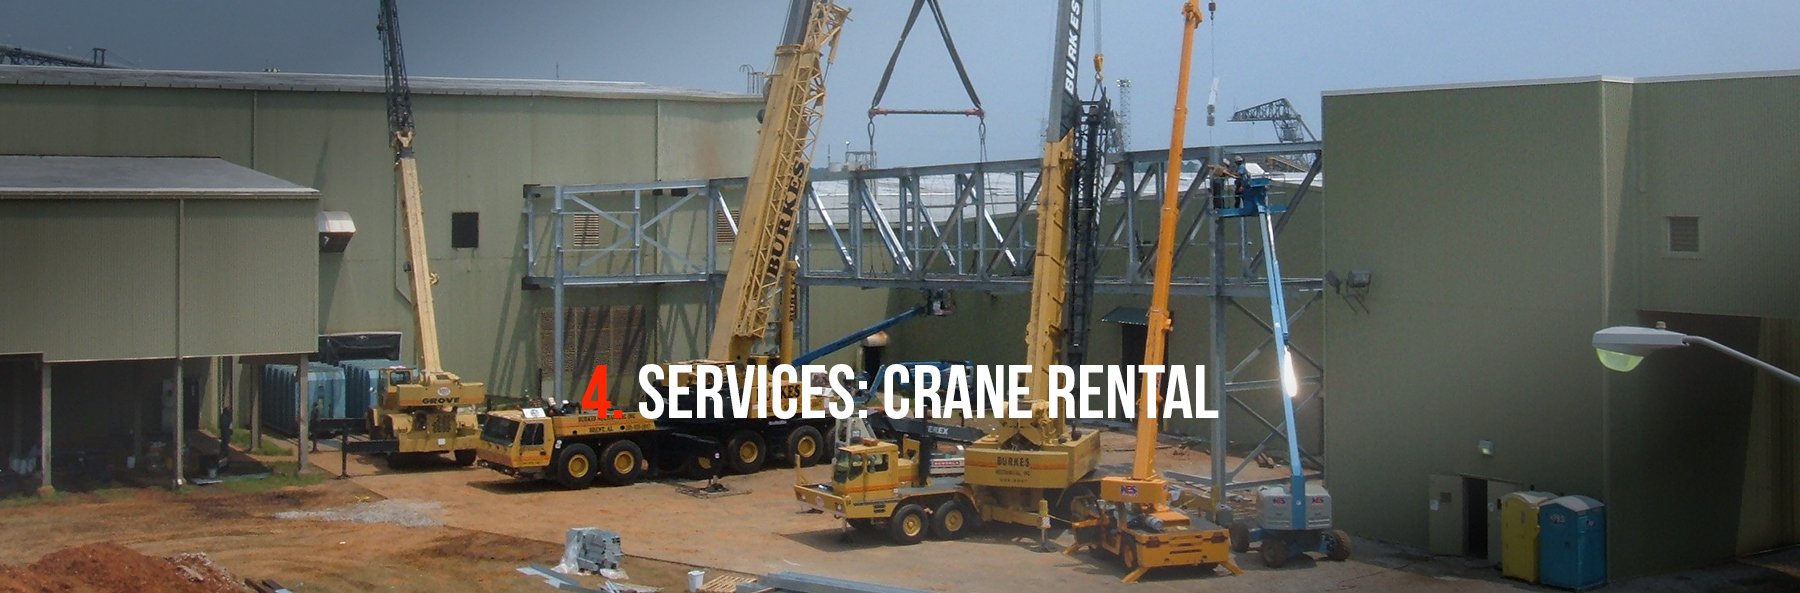 Services: Crane Rental